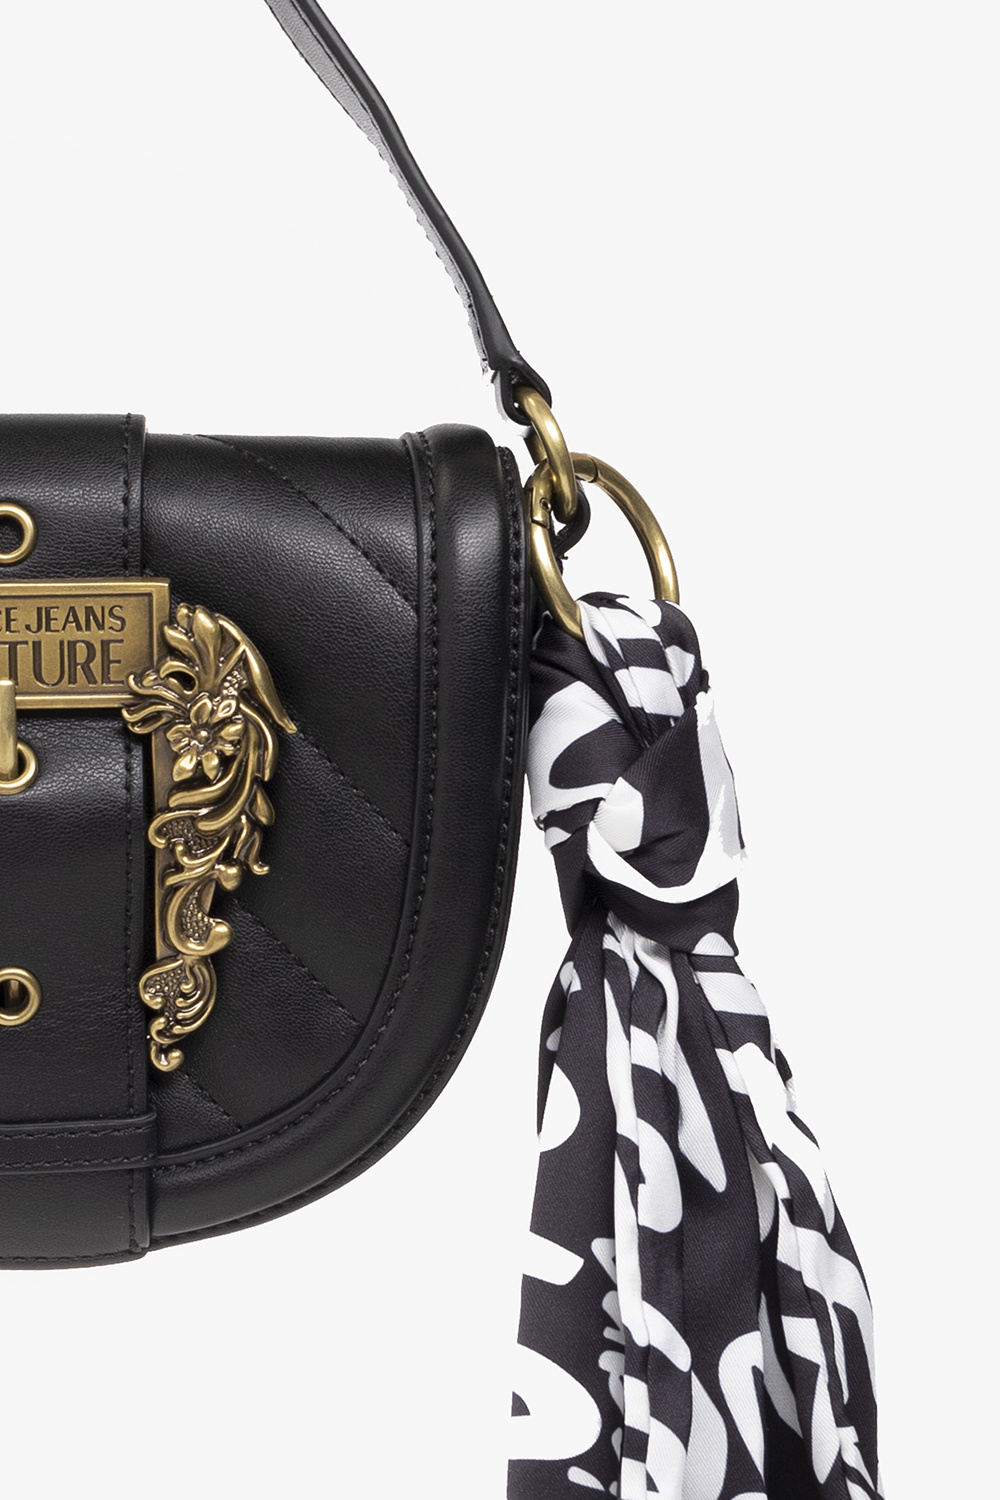 Versace Jeans Couture Black Structured Baroque Belt Crossbody/Shoulder Bag  for womens: Handbags